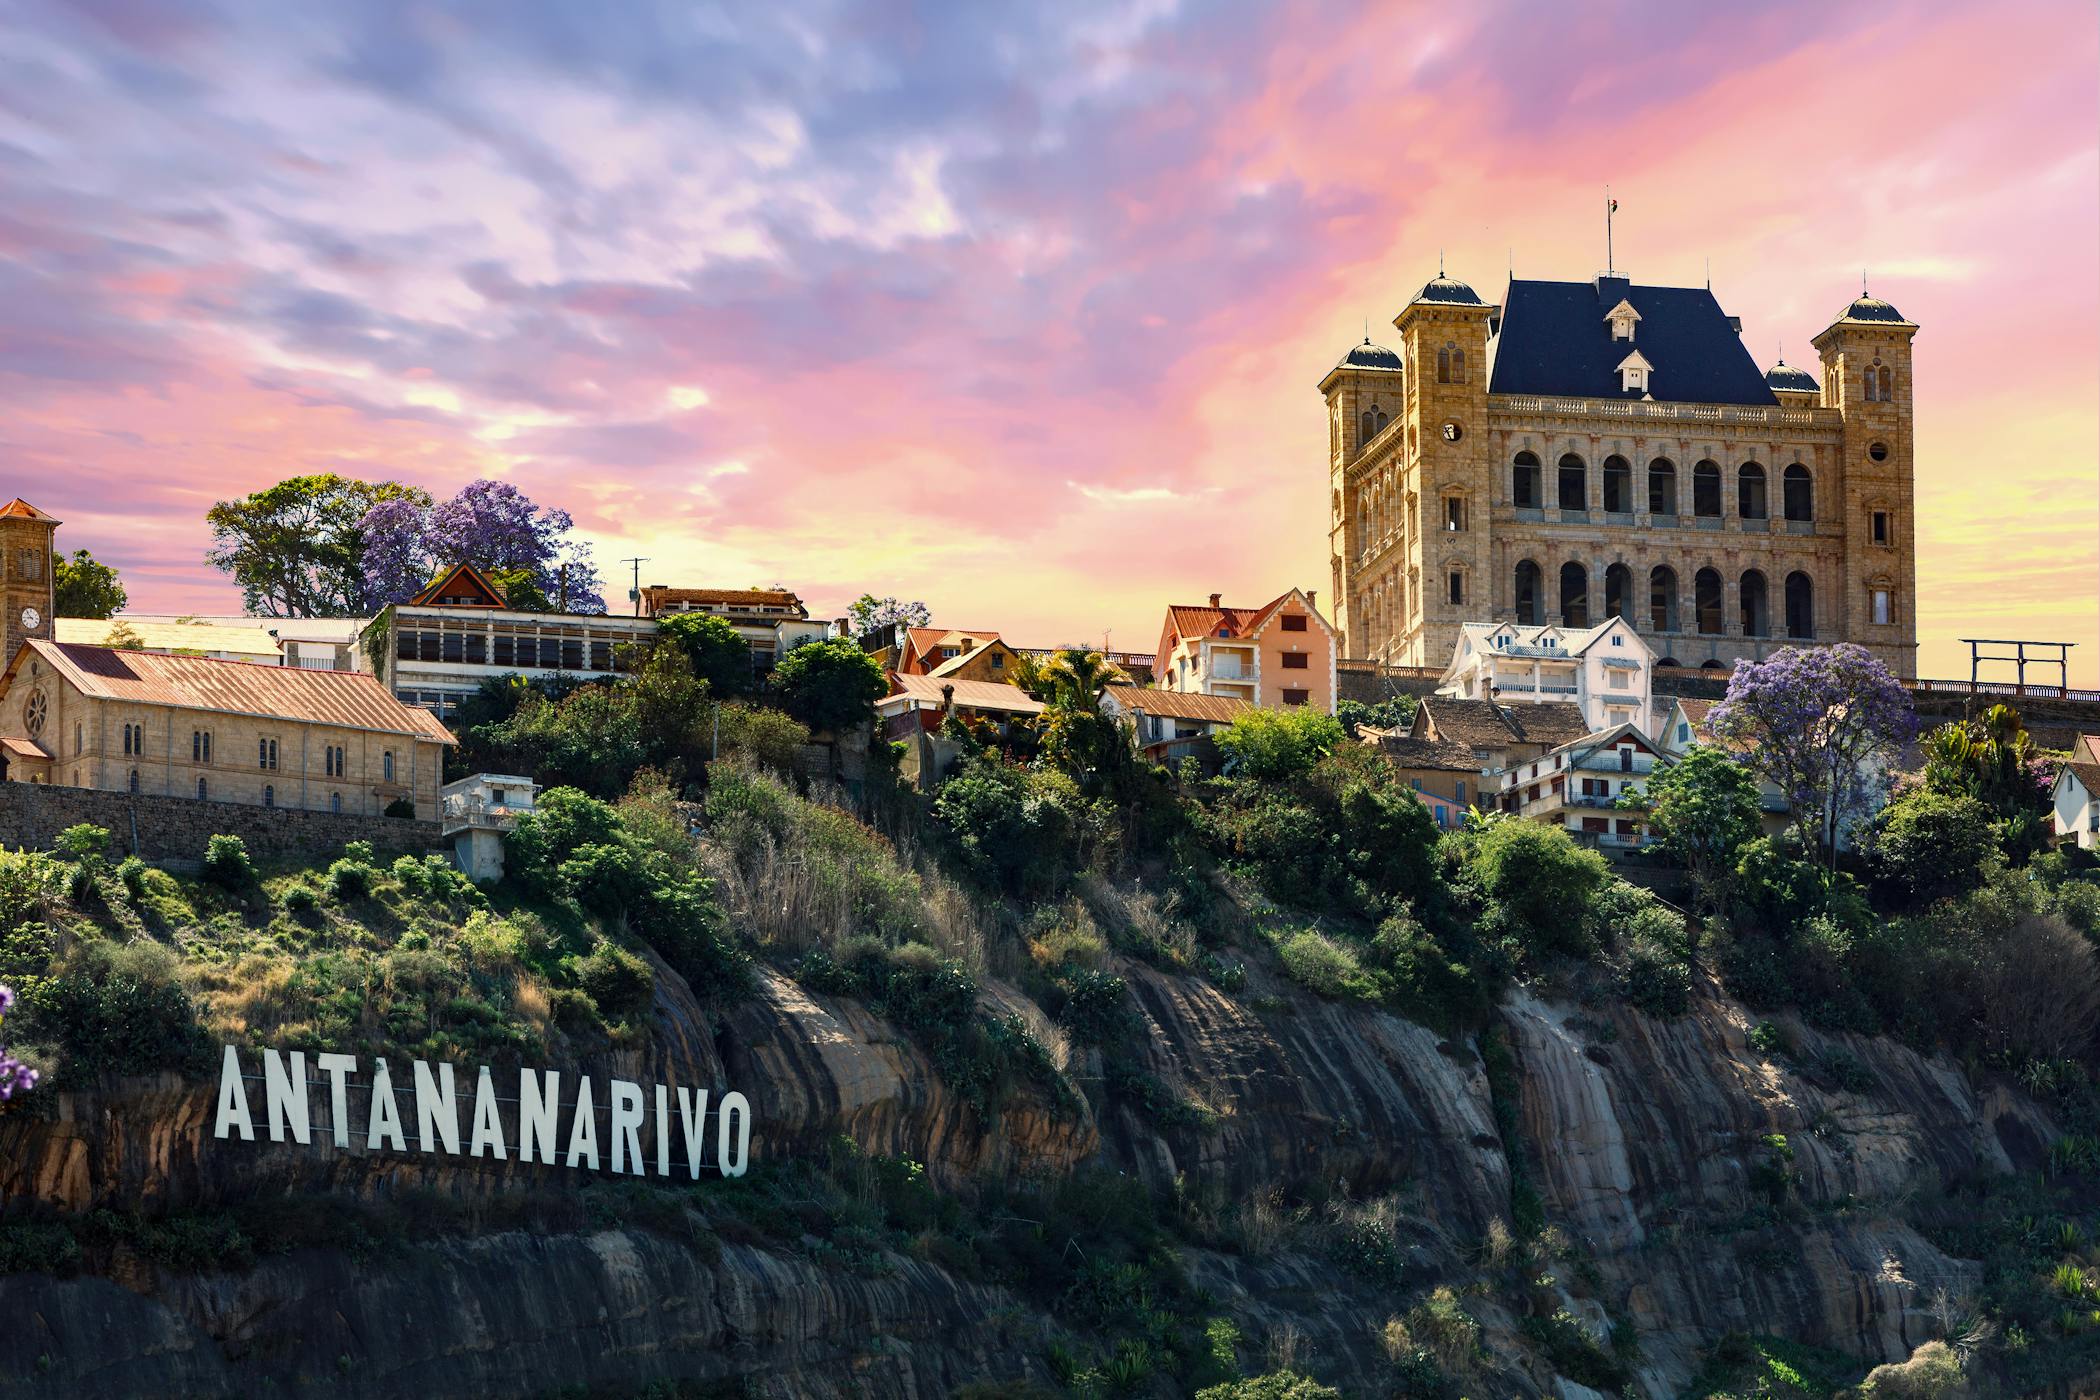 Take a stroll around Antananarivo, the capital city of Madagascar